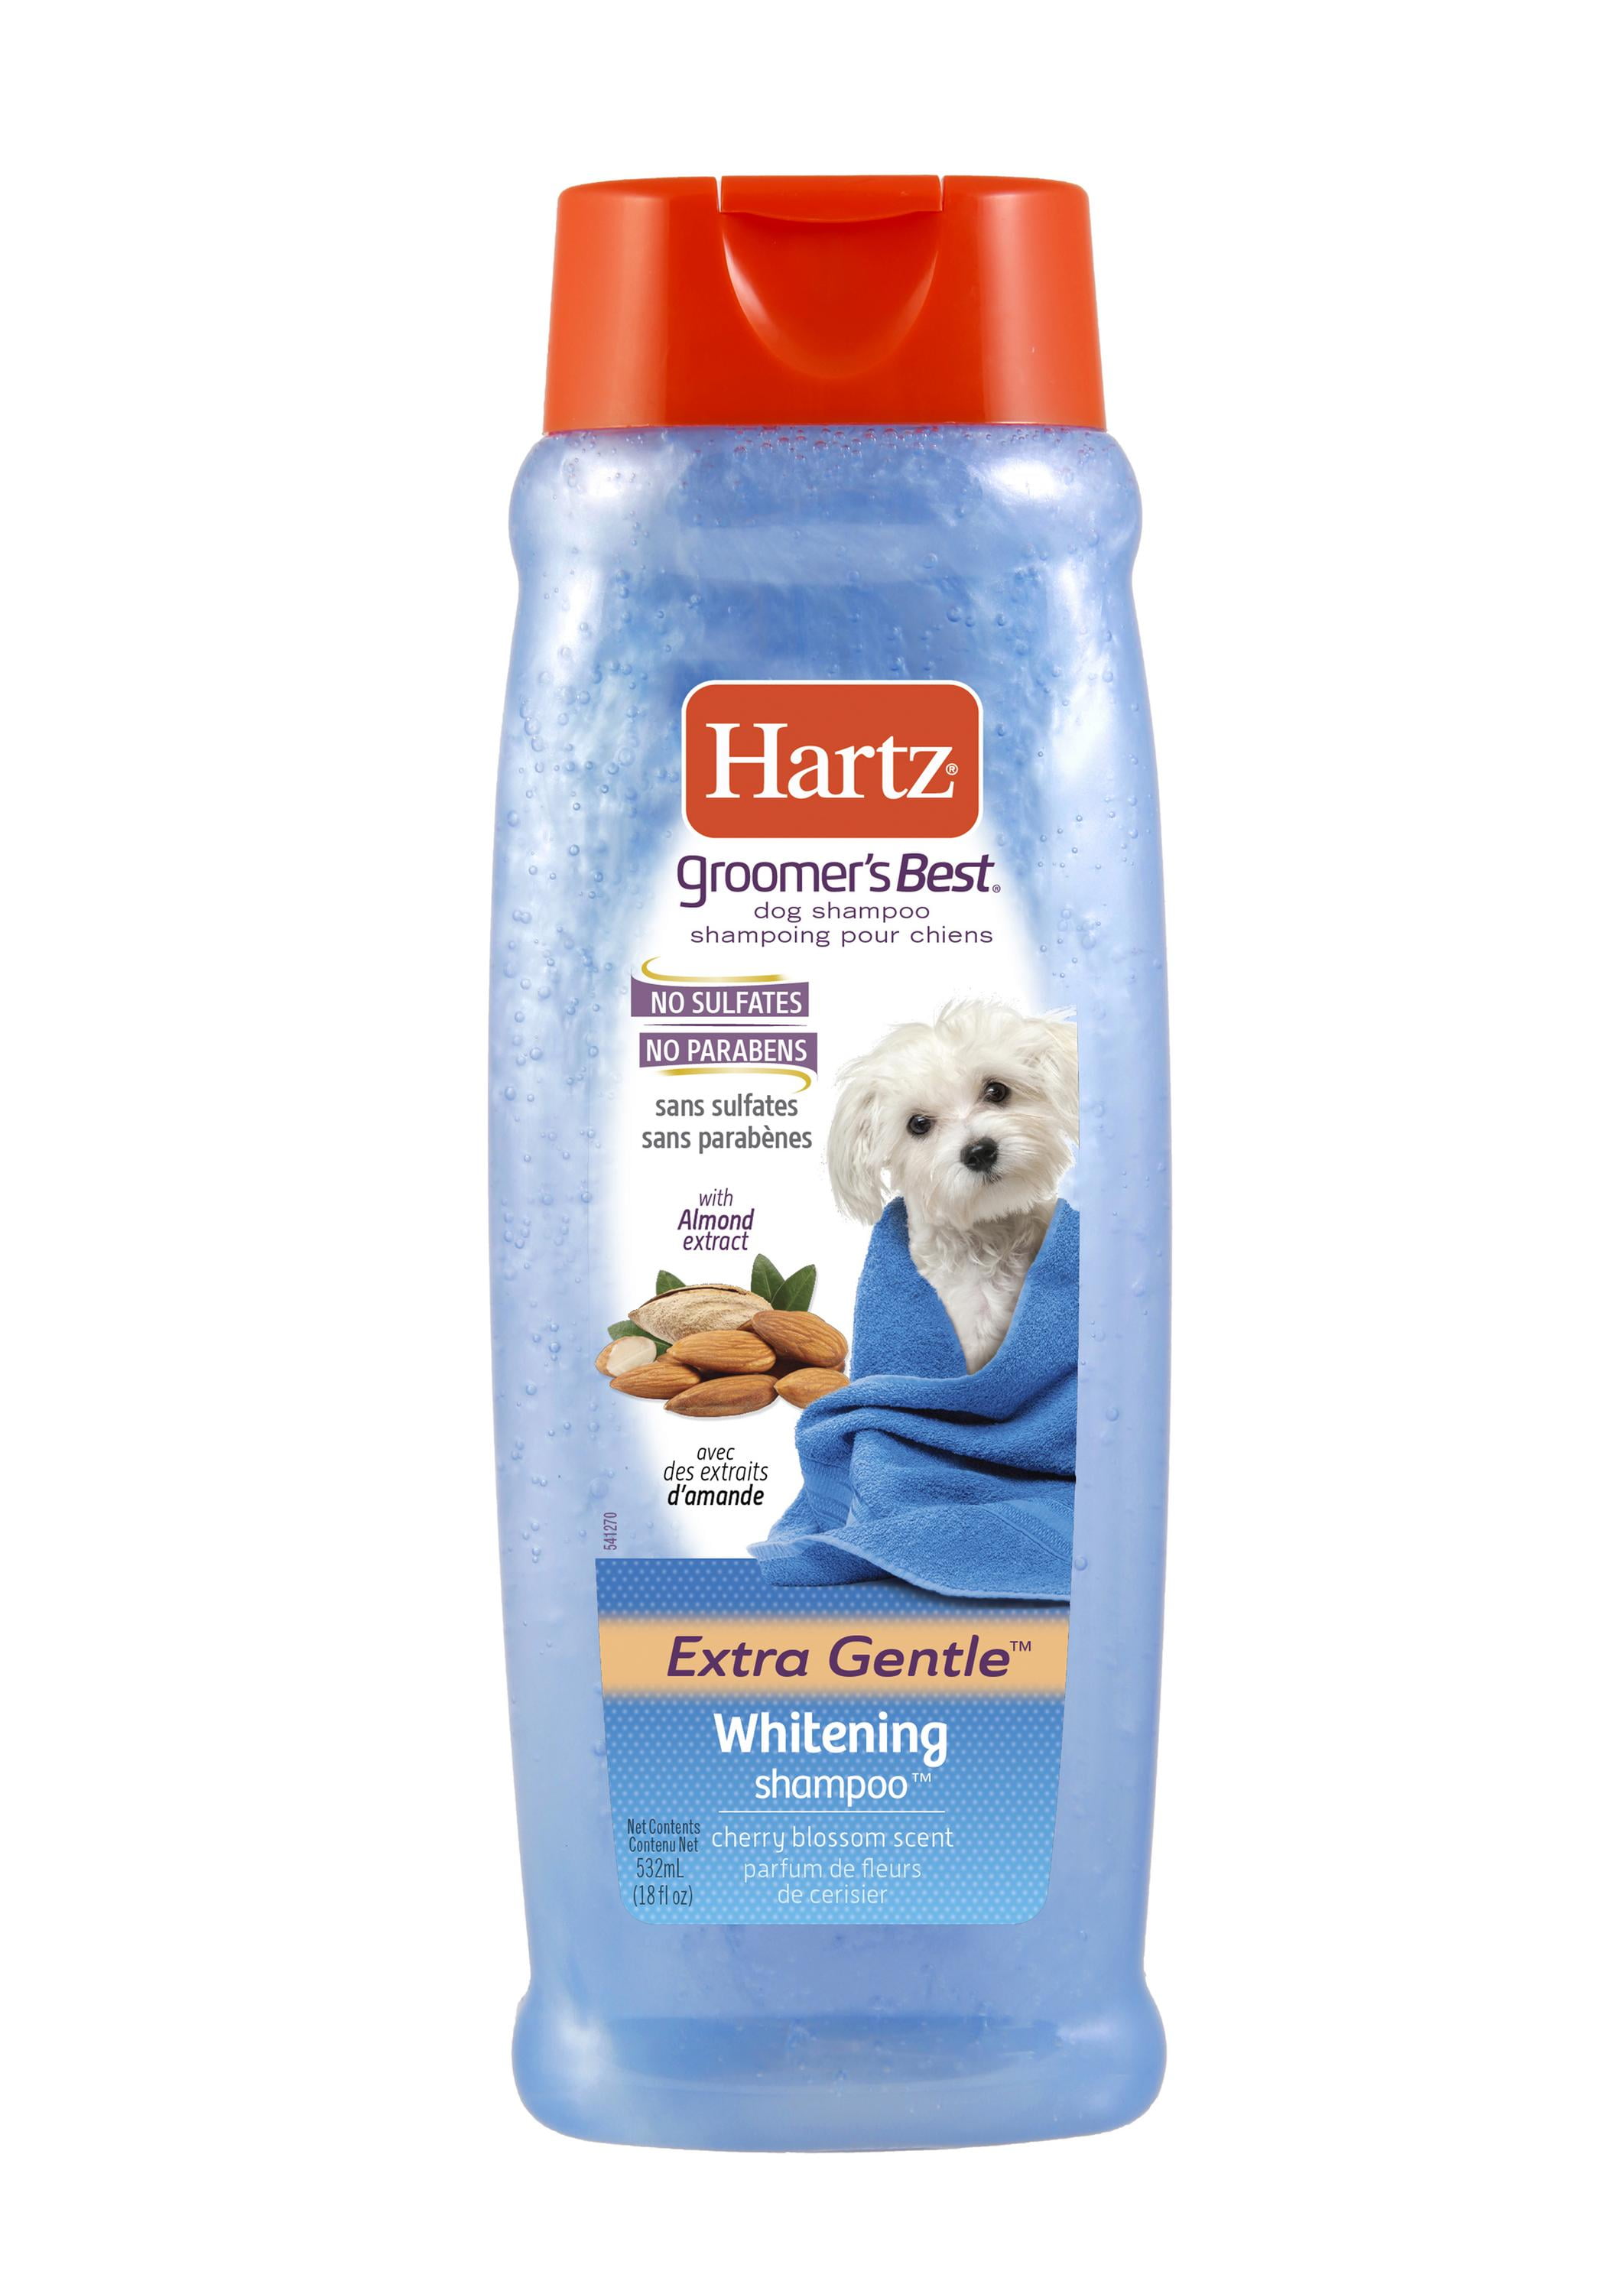 Hartz Groomers Best Whitening Dog Shampoo 18oz